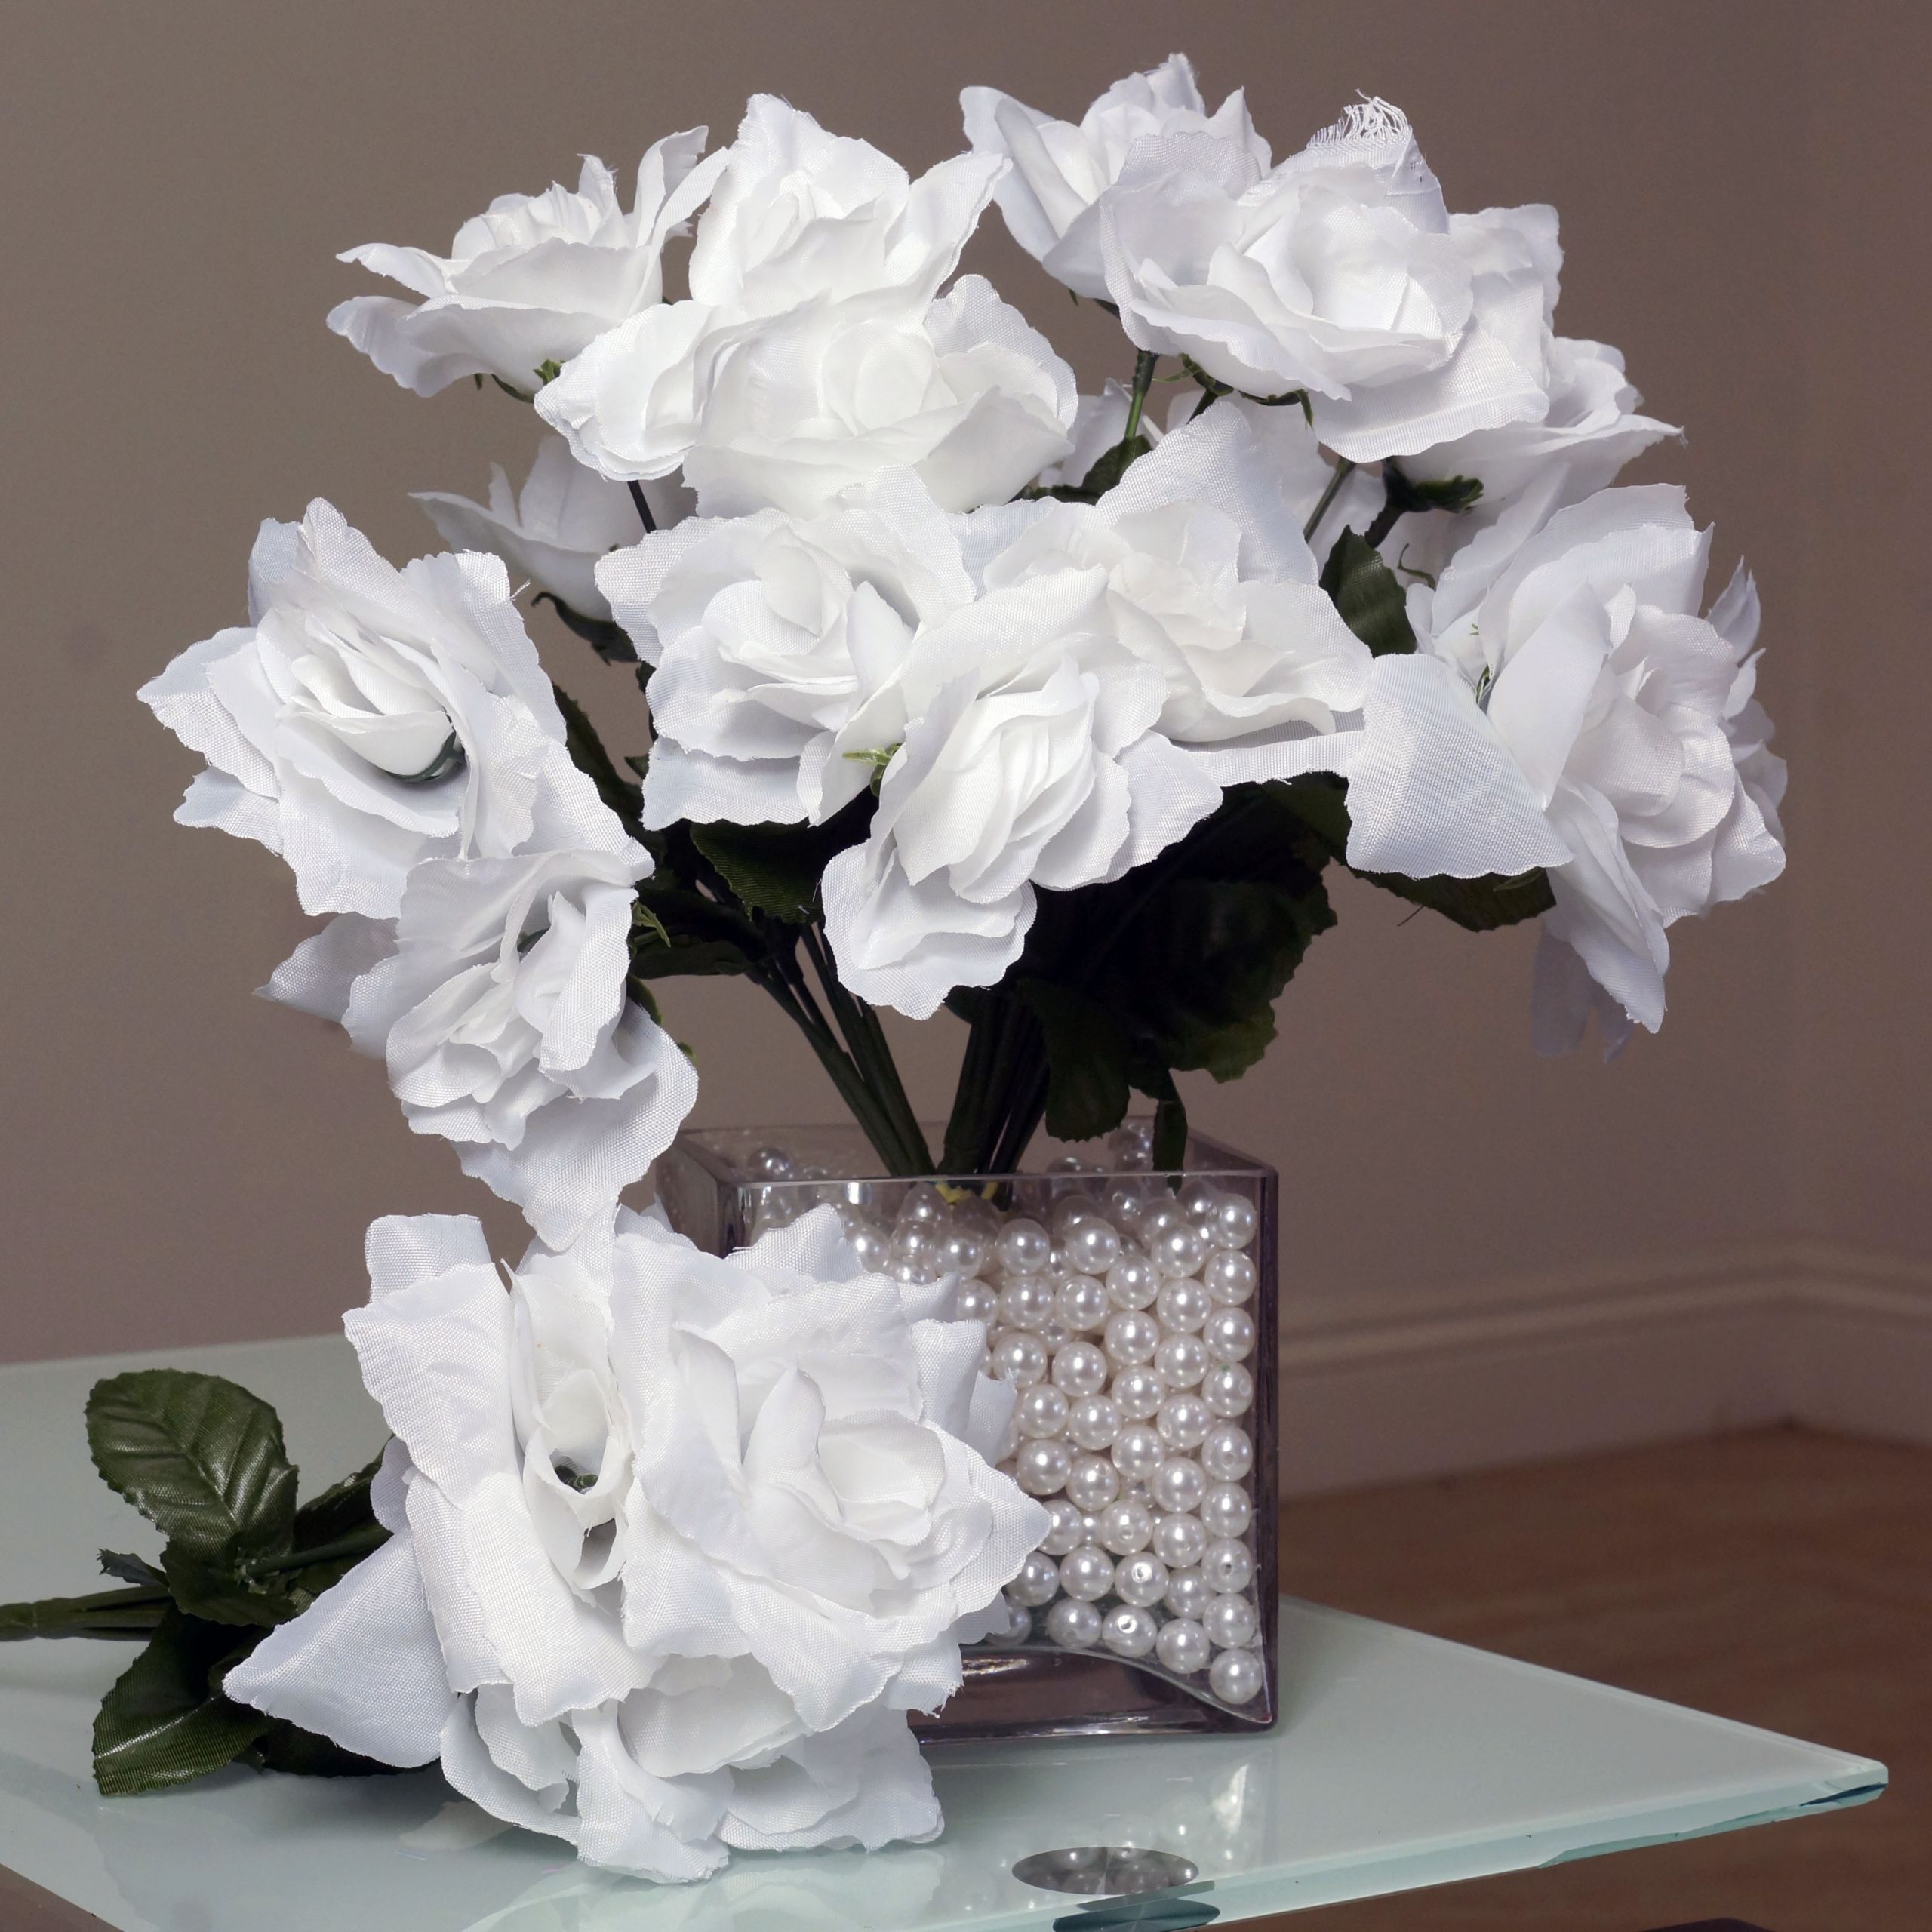 Silk Flower Wedding Centerpieces
 252 SILK OPEN ROSES Wedding WHOLESALE Discounted Flowers